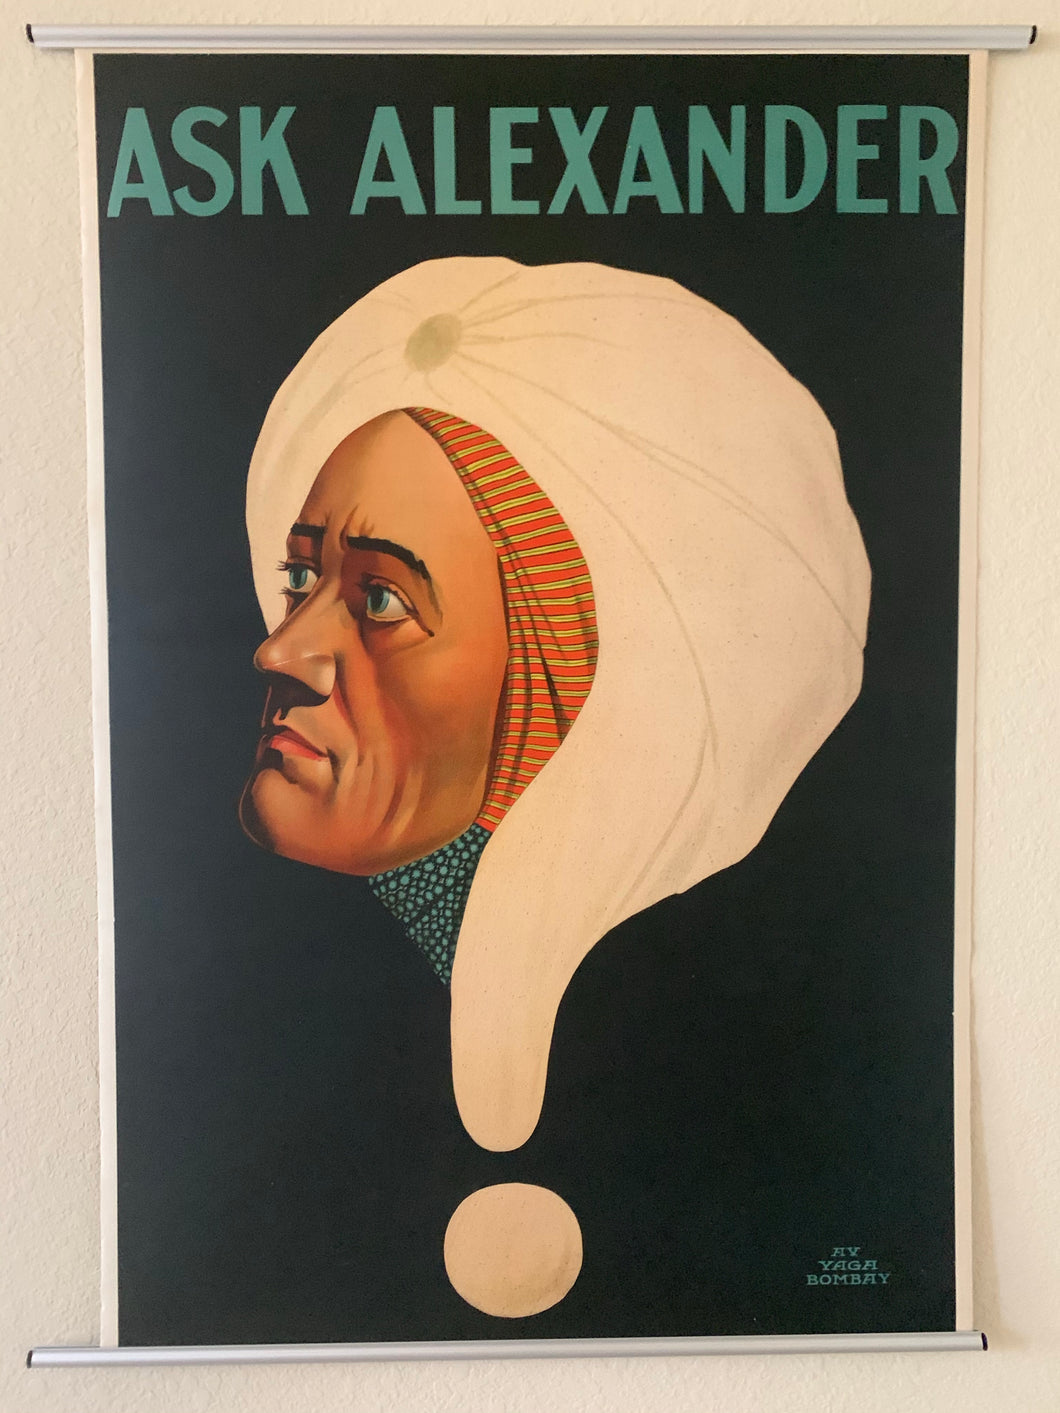 Original Alexander Poster (Ask Alexander)